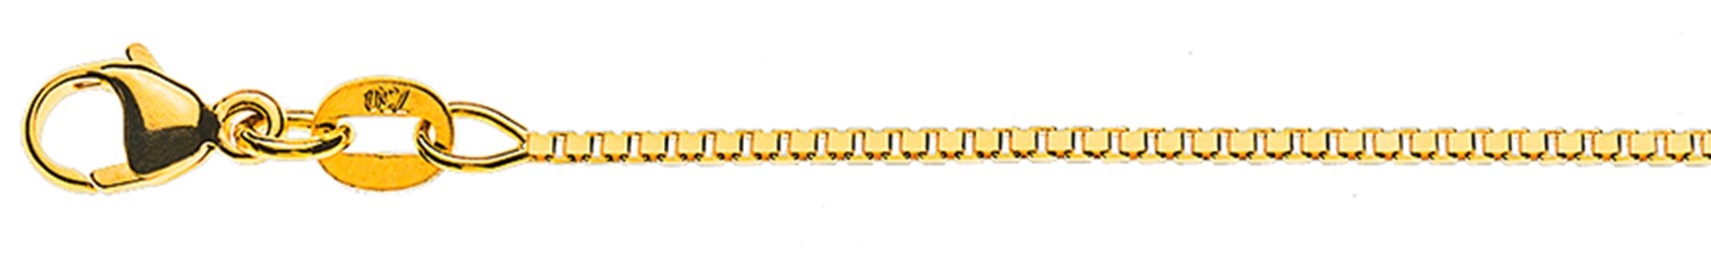 AURONOS Style Necklace yellow gold 9K Venetian chain diamond 42cm 1.1mm